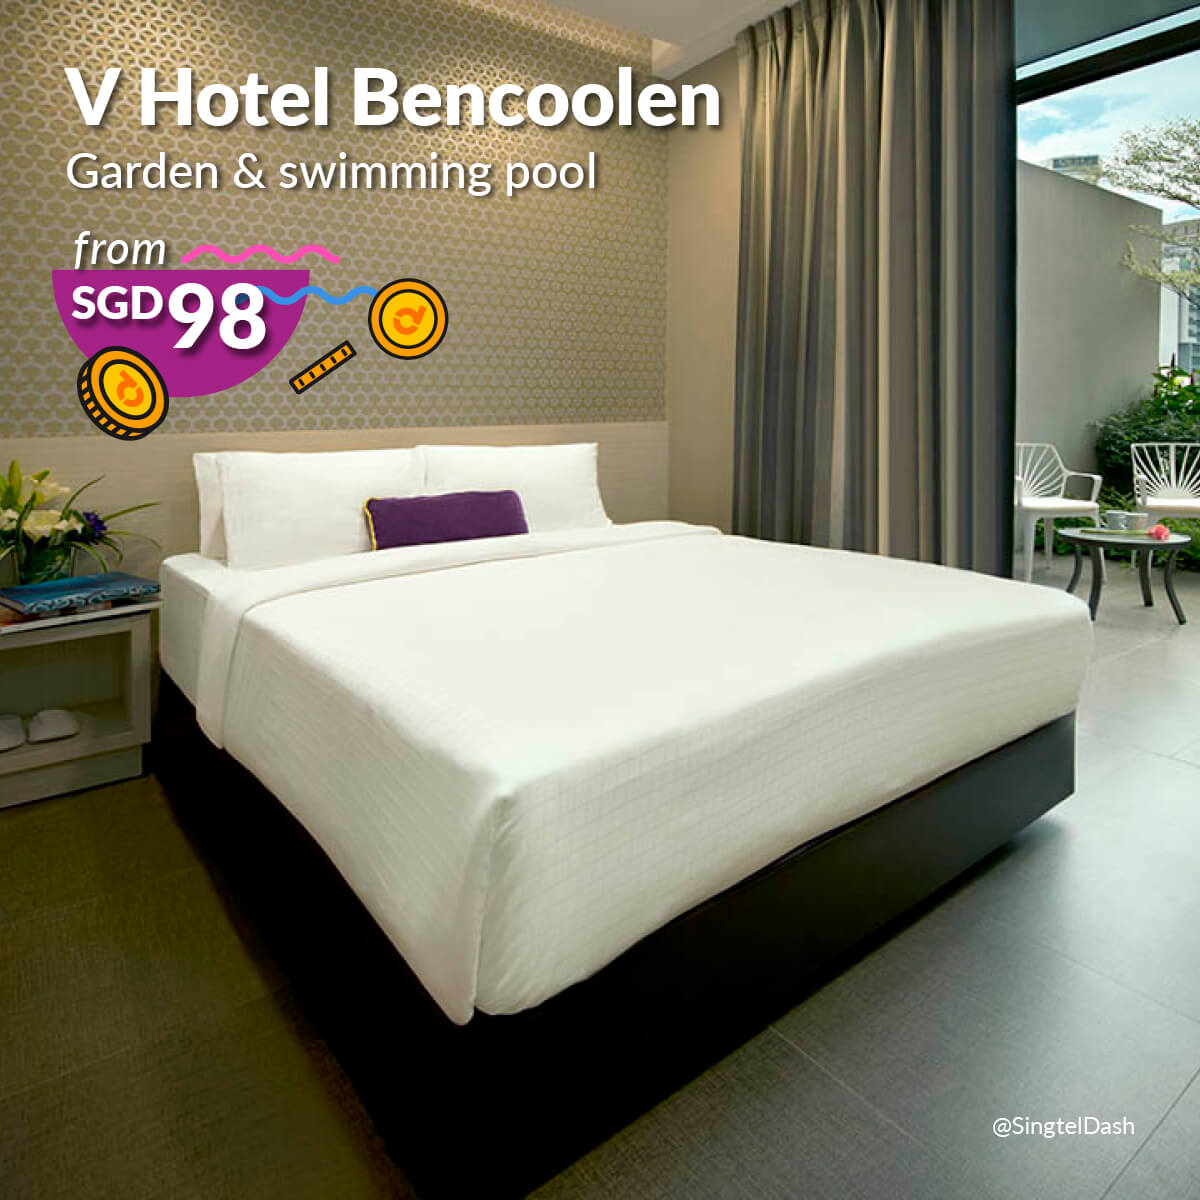 v_hotel_bencoolen